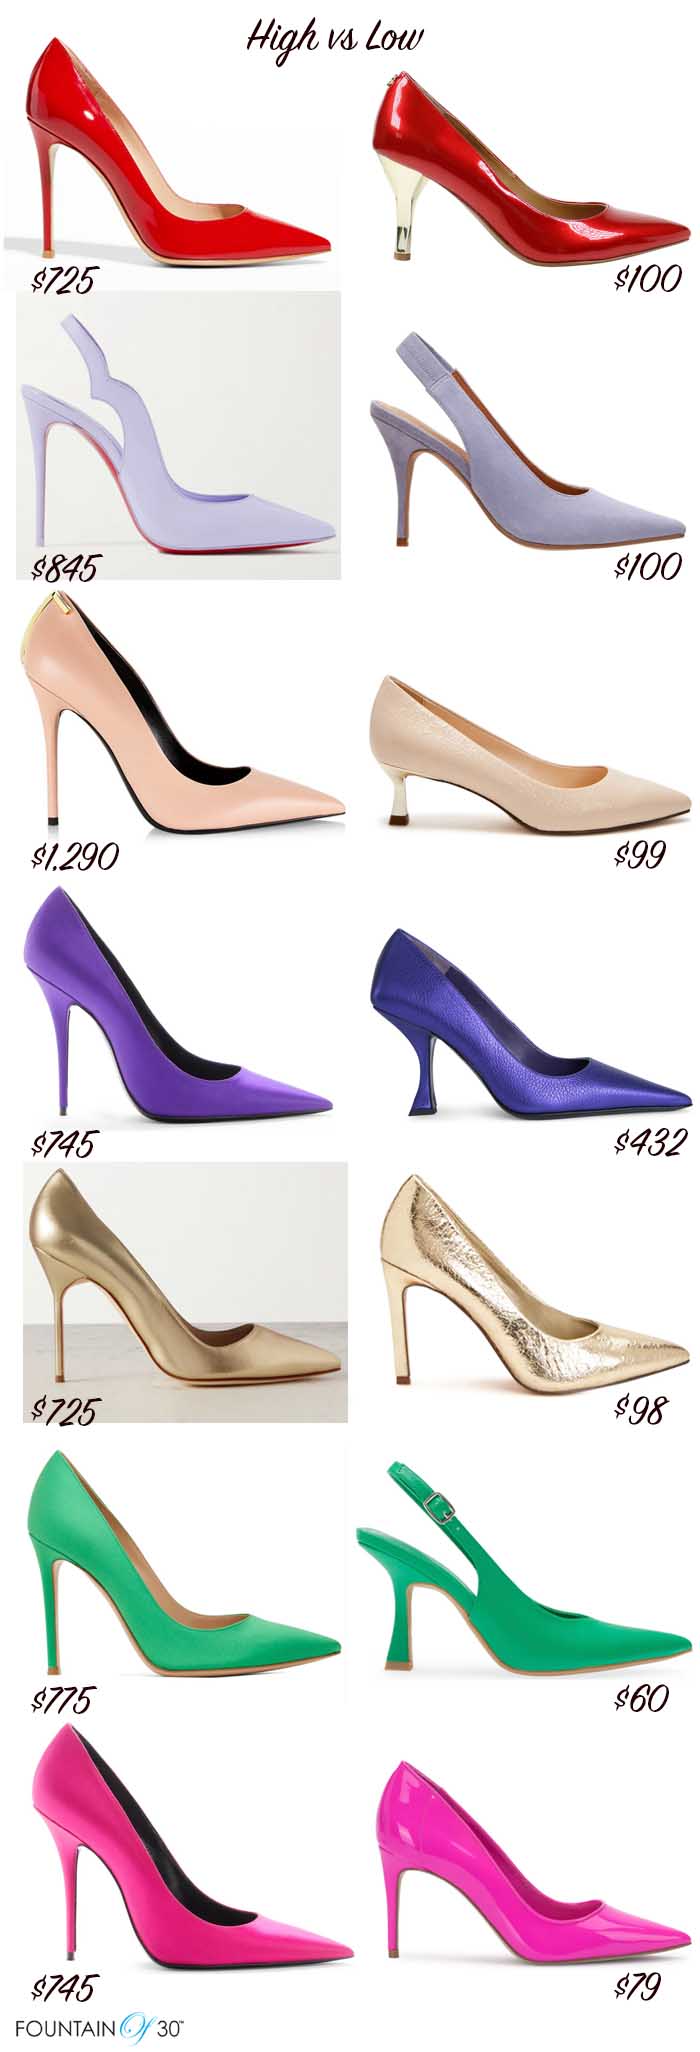 colorful high heel pumps fountainof30